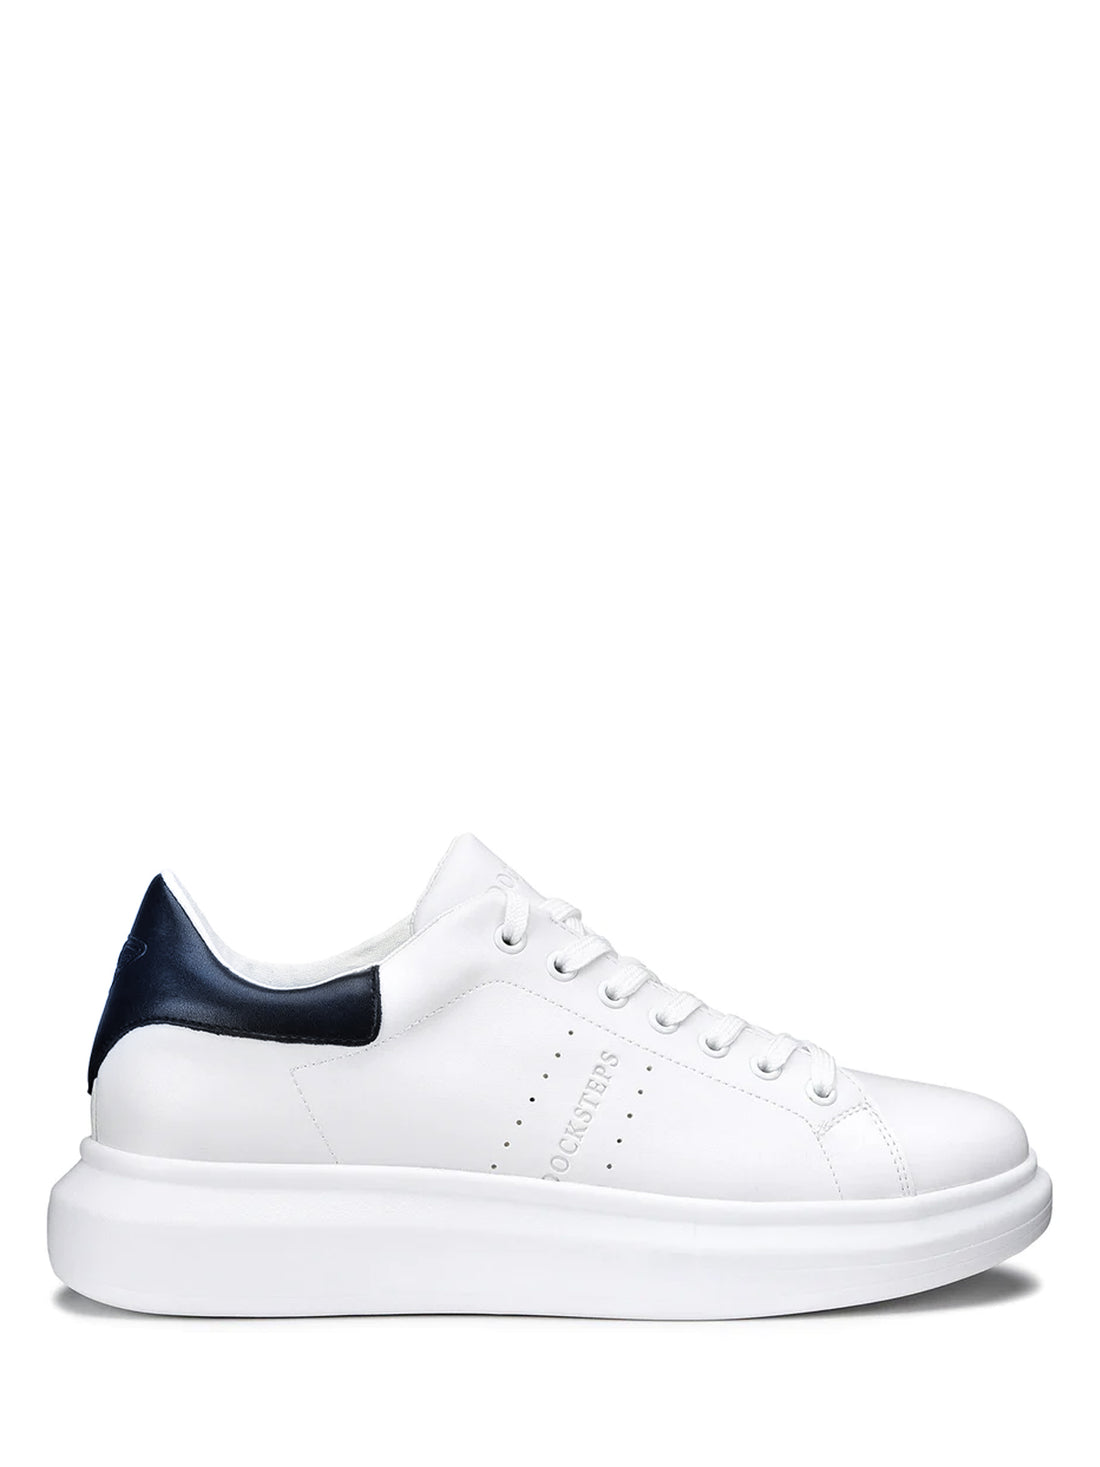 Sneakers Bianco Blu Docksteps